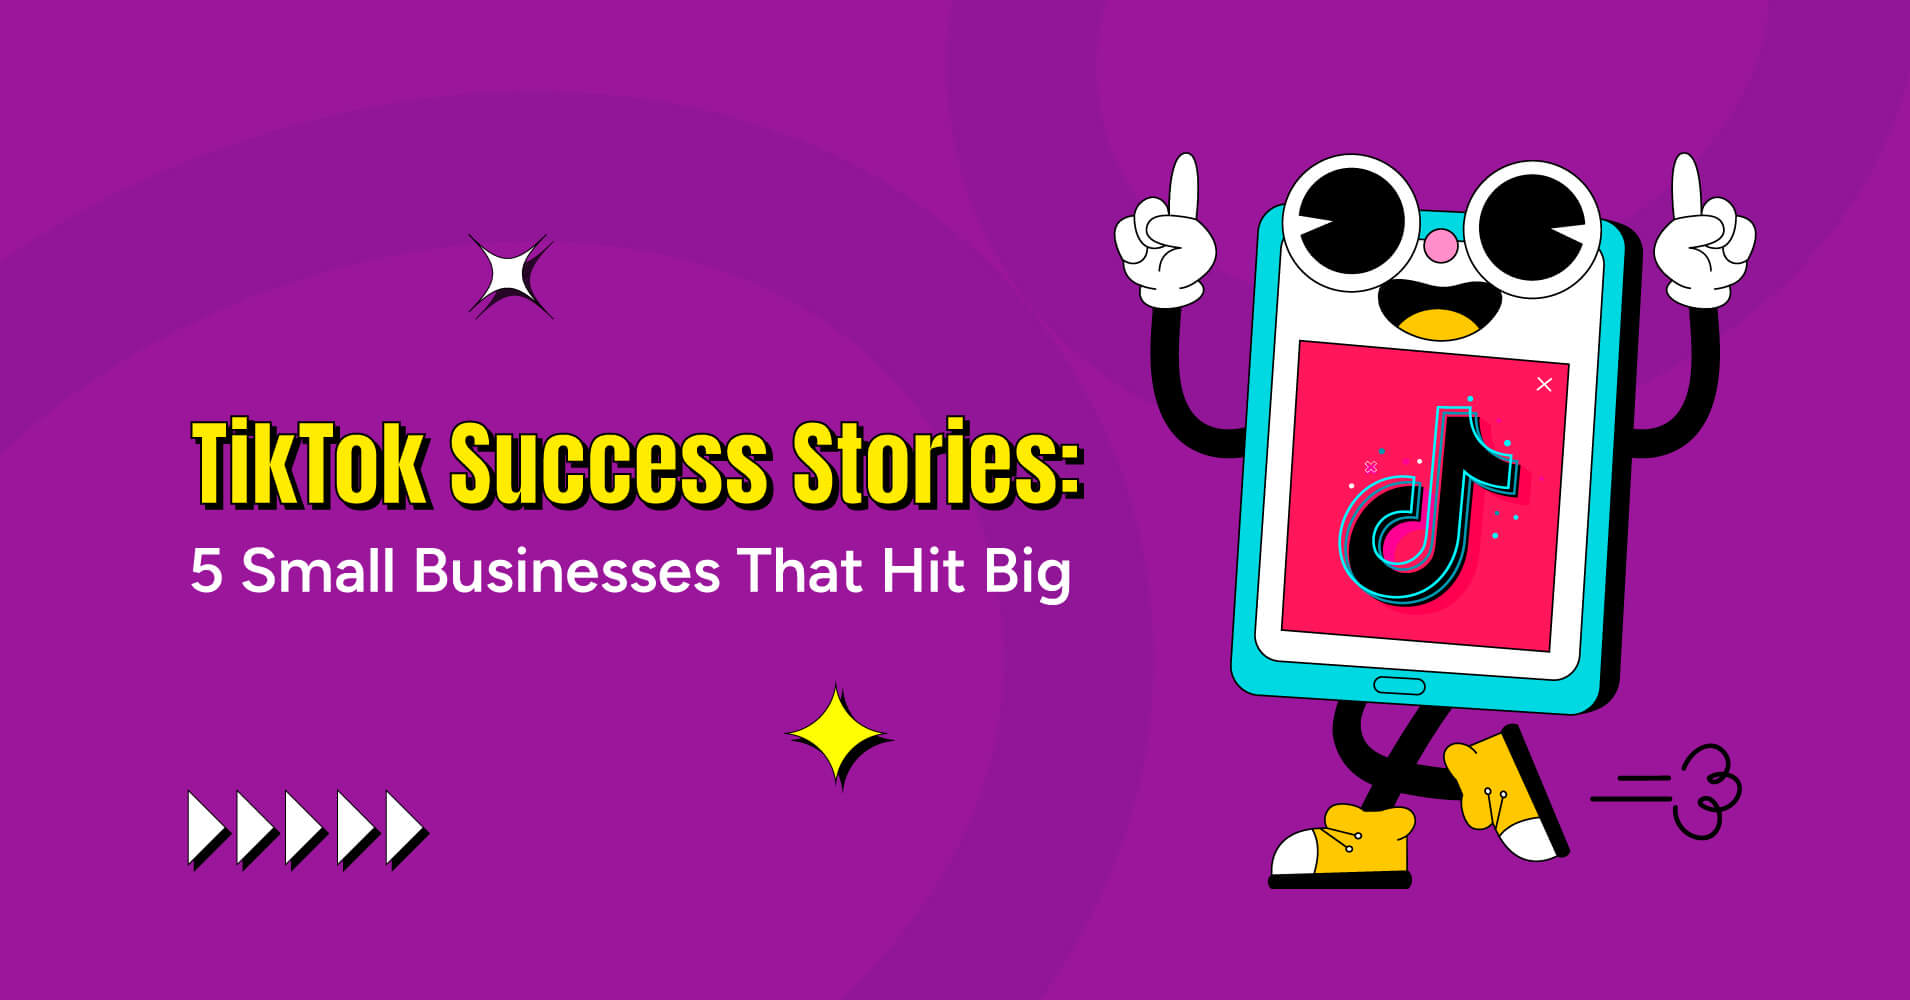 TikTok Success Stories: 5 Small Businesses That Hit Big